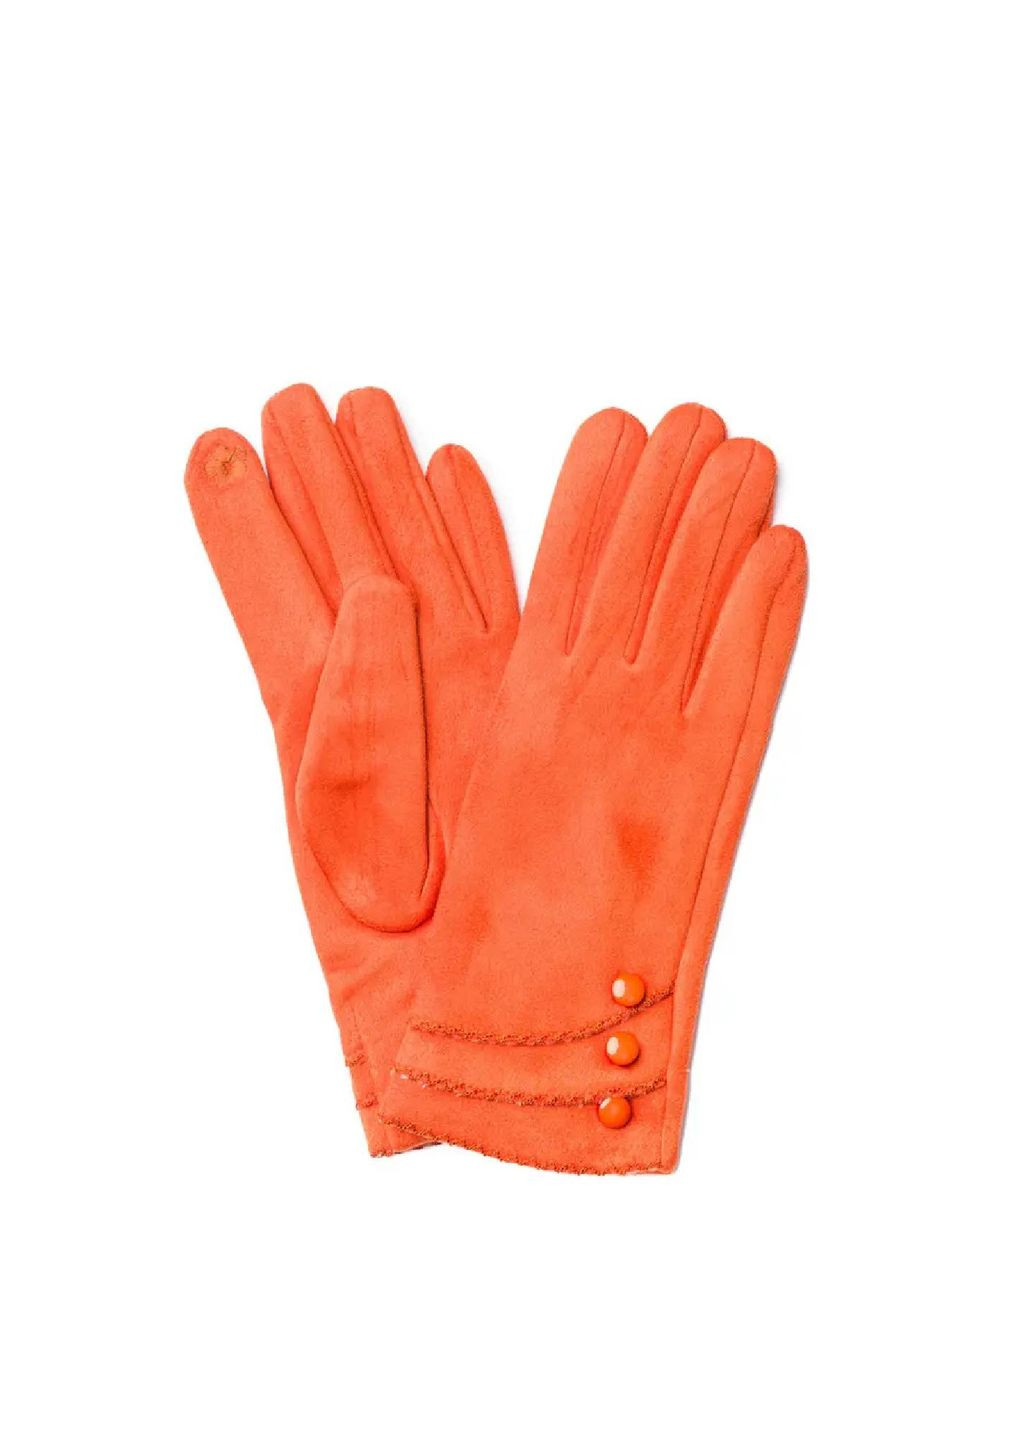 Перчатки Smart Touch женские экозамш оранжевые LuckyLOOK 688-521 (290278230)